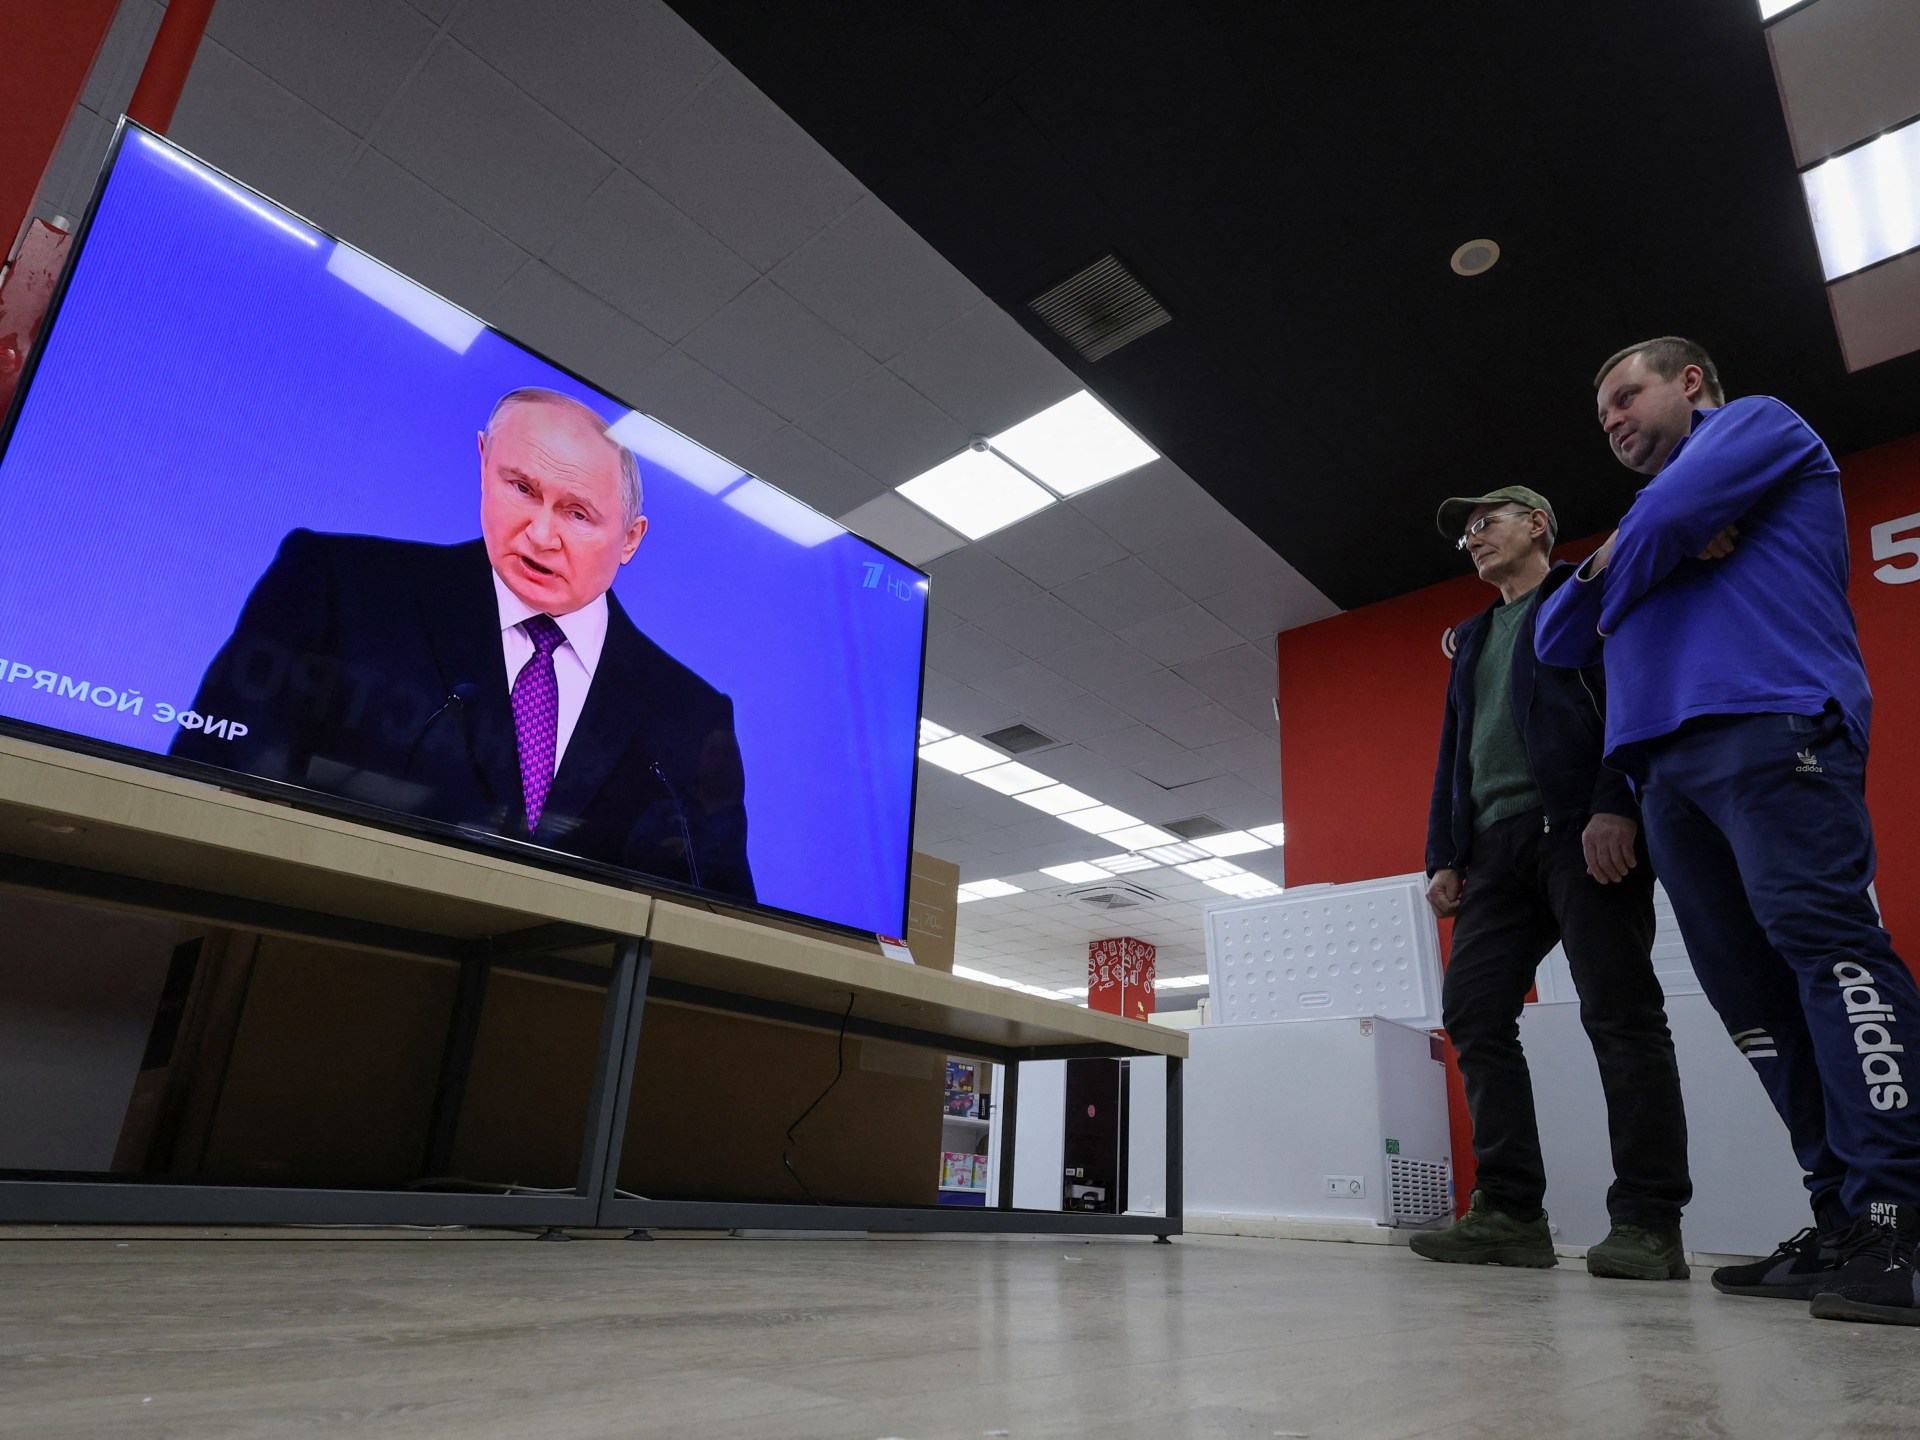 After Macron touted troops to Ukraine, Putin warns West of nuclear war risk | Russia-Ukraine war News